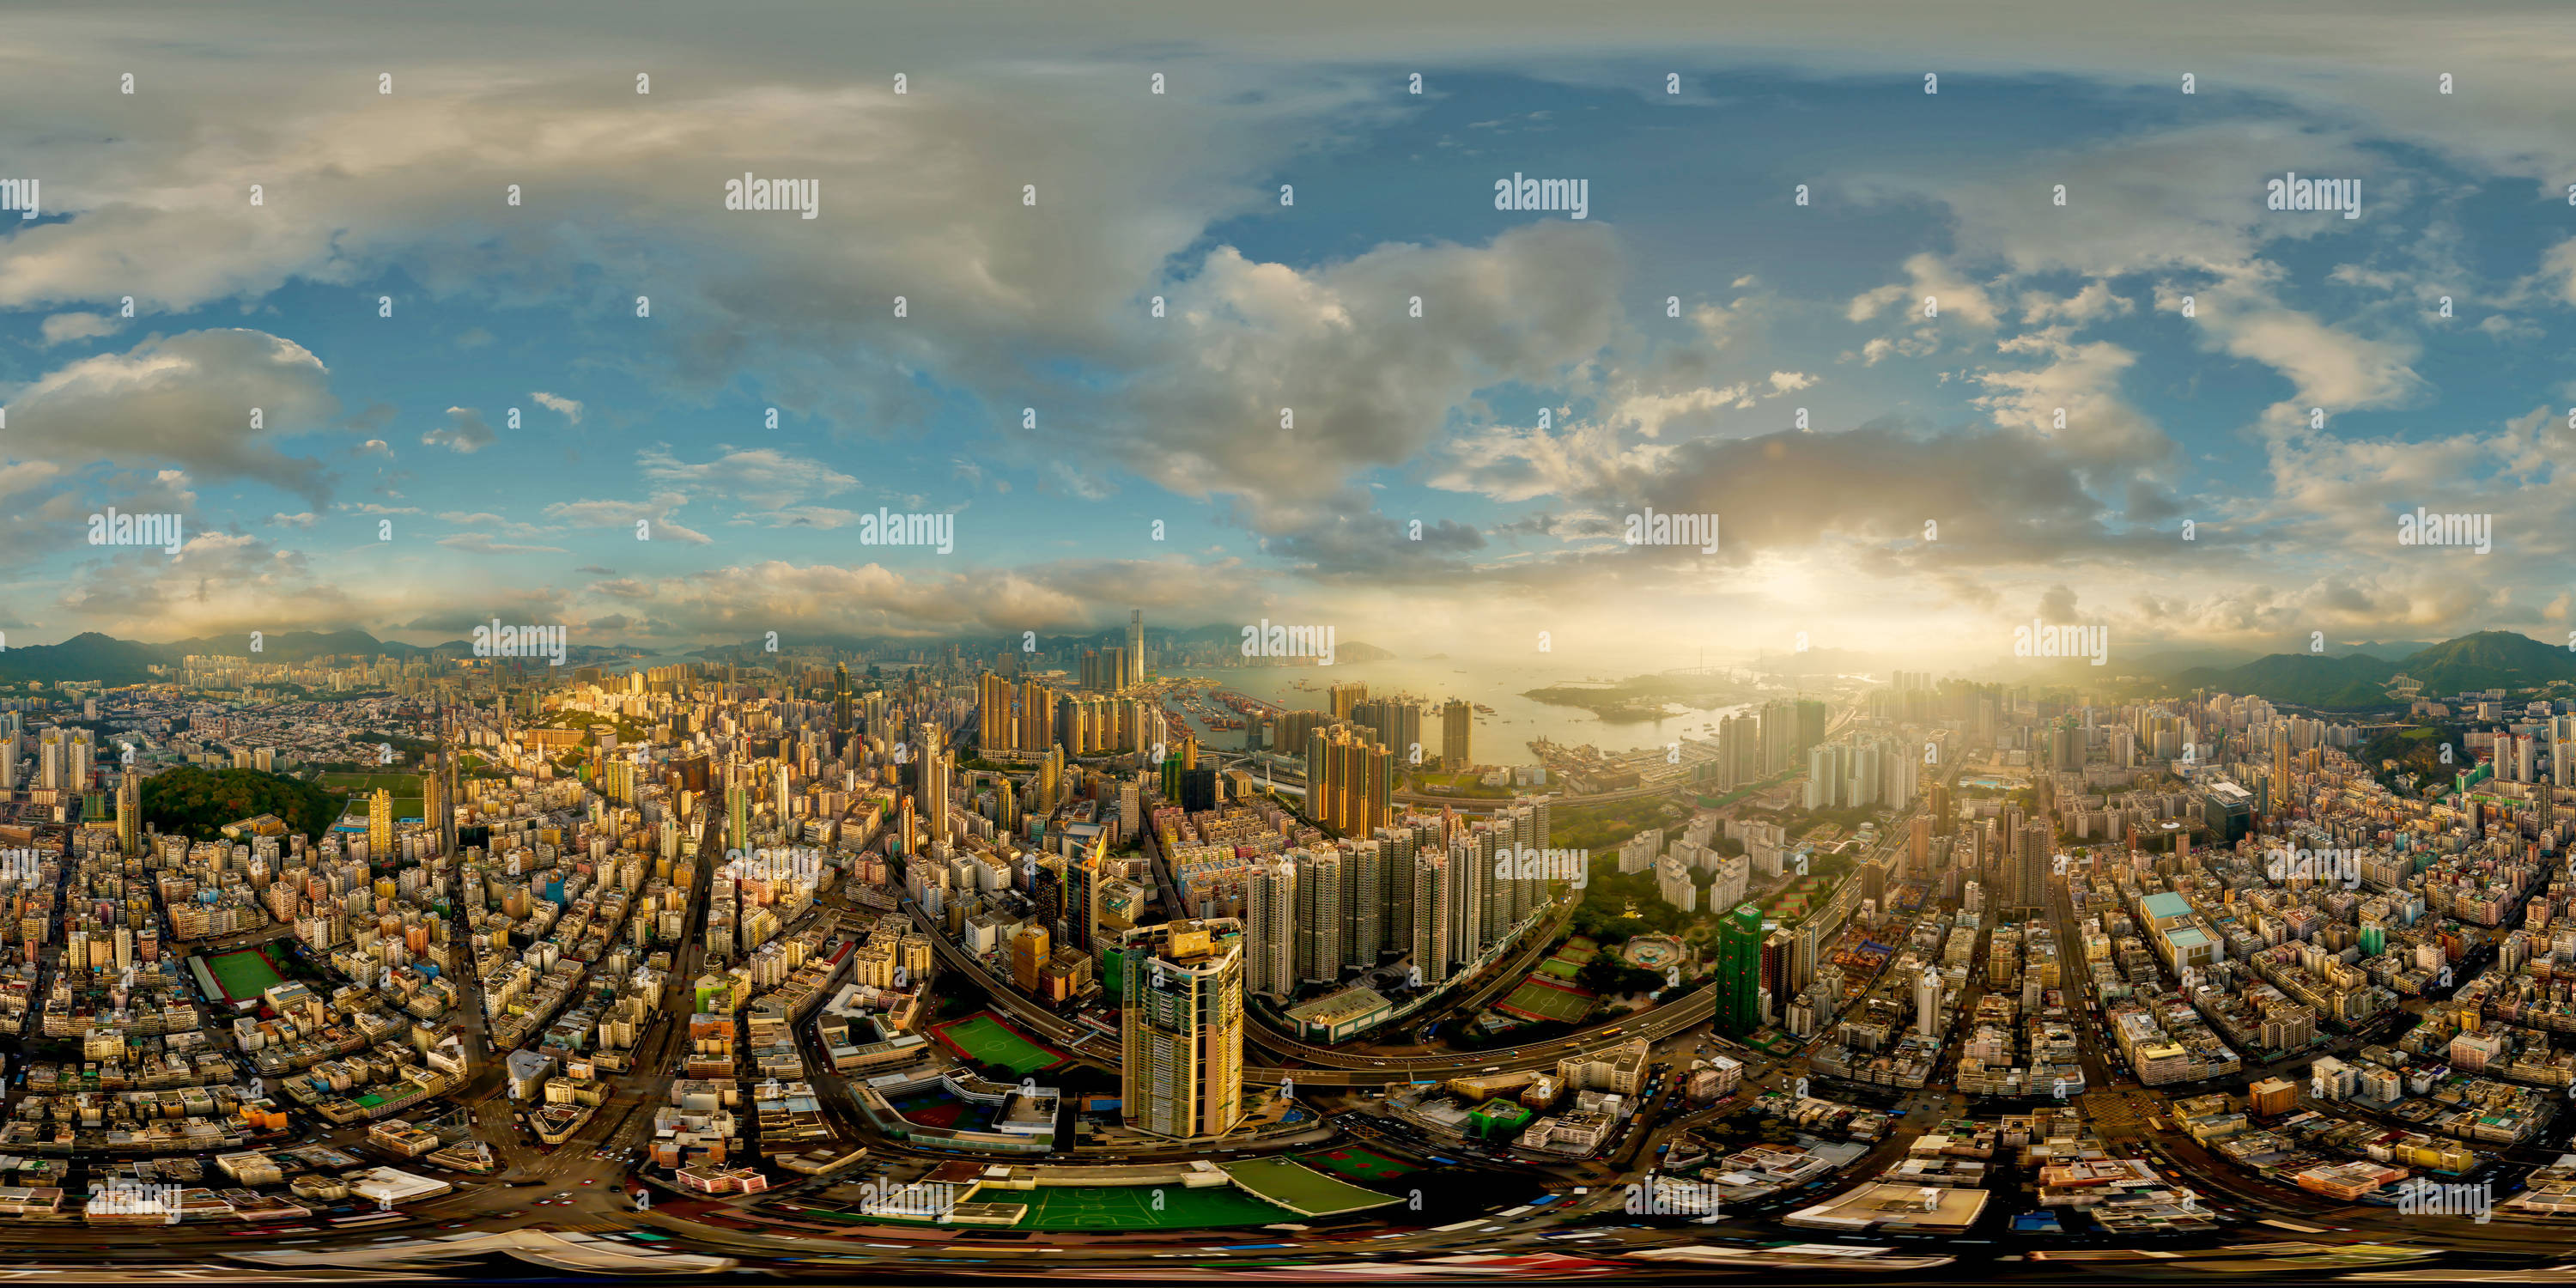 Vista panorámica en 360 grados de Hong Kong West Kowloon 2018